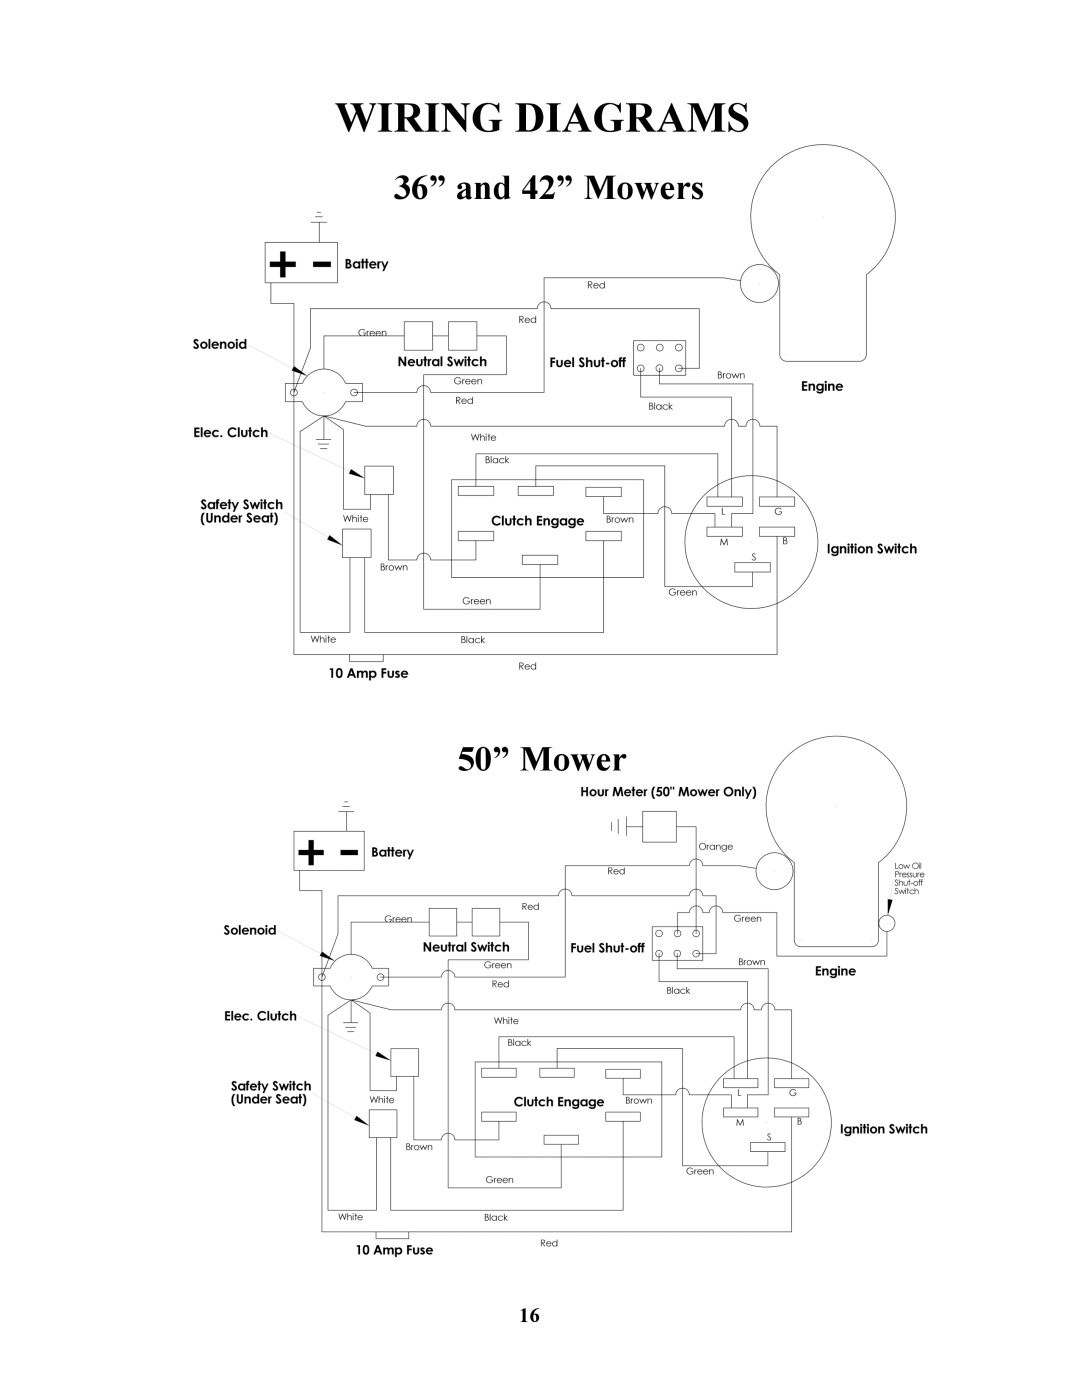 Swisher ZT17542B, ZT1842, ZT20050 manual Wiring Diagrams, 36” and 42” Mowers 50” Mower 